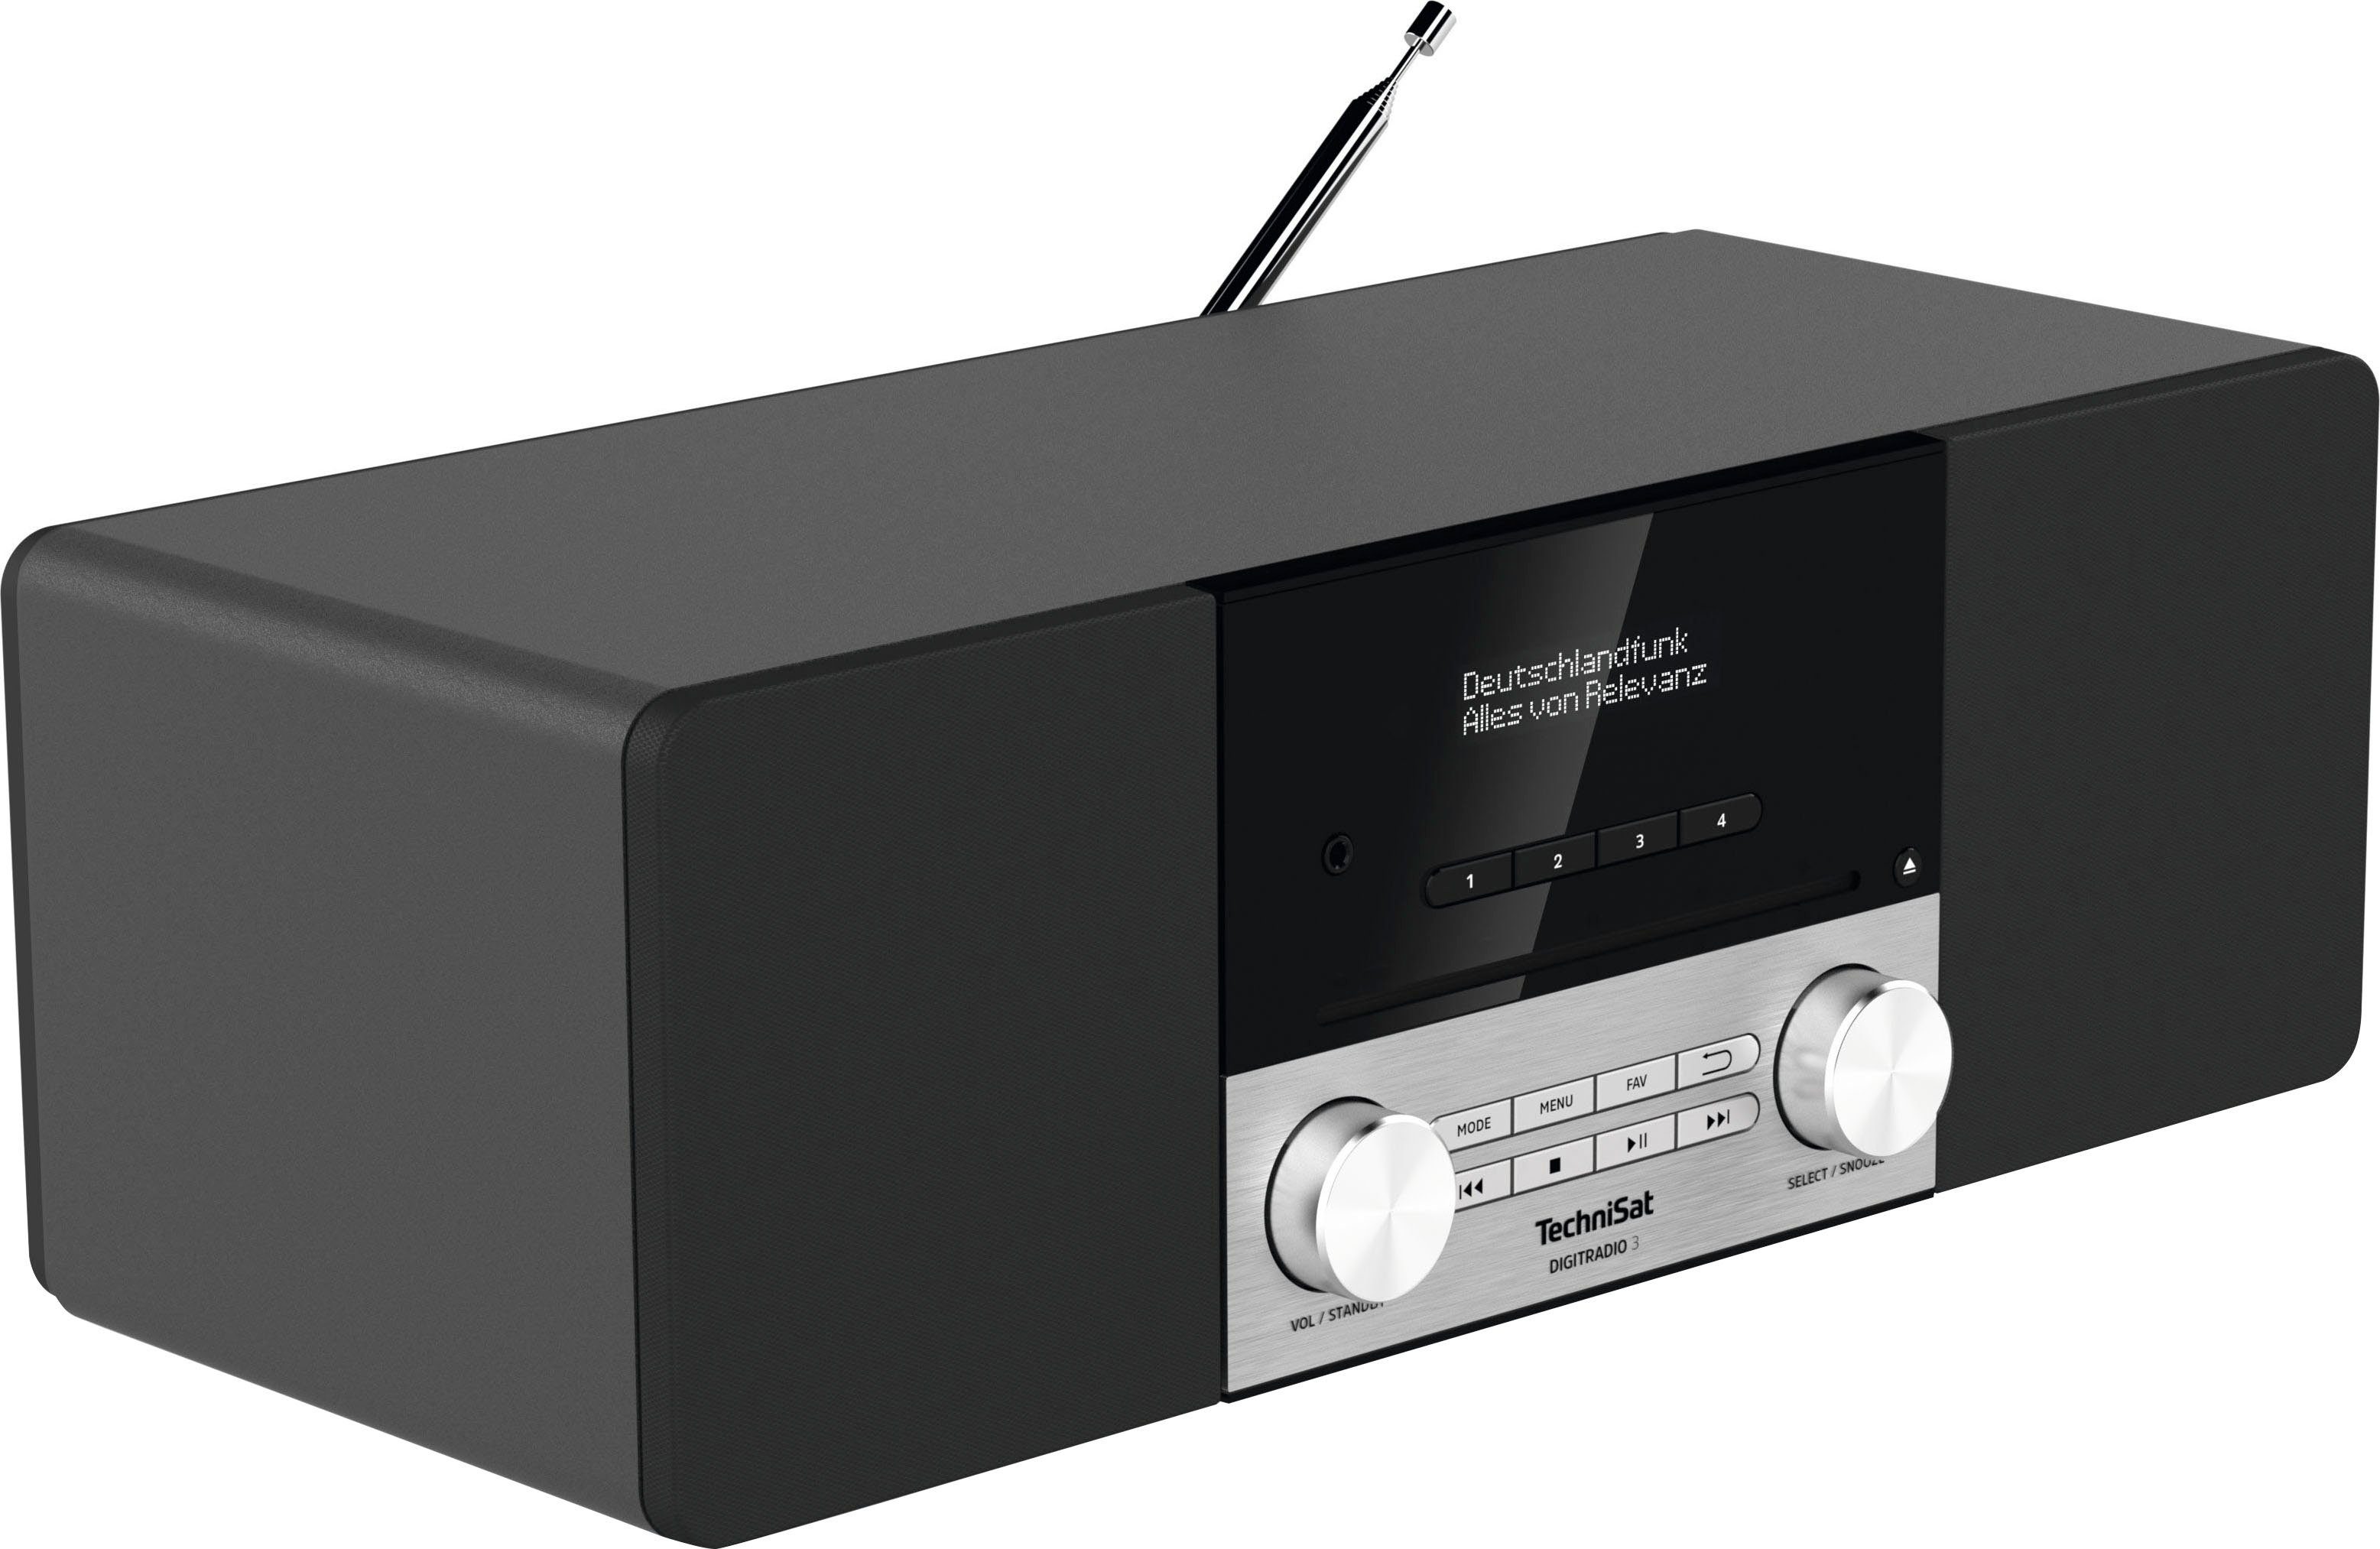 Digitalradio Made DIGITRADIO 3 UKW (Digitalradio Germany) W, CD-Player, mit RDS, (DAB) TechniSat schwarz 20 in (DAB),